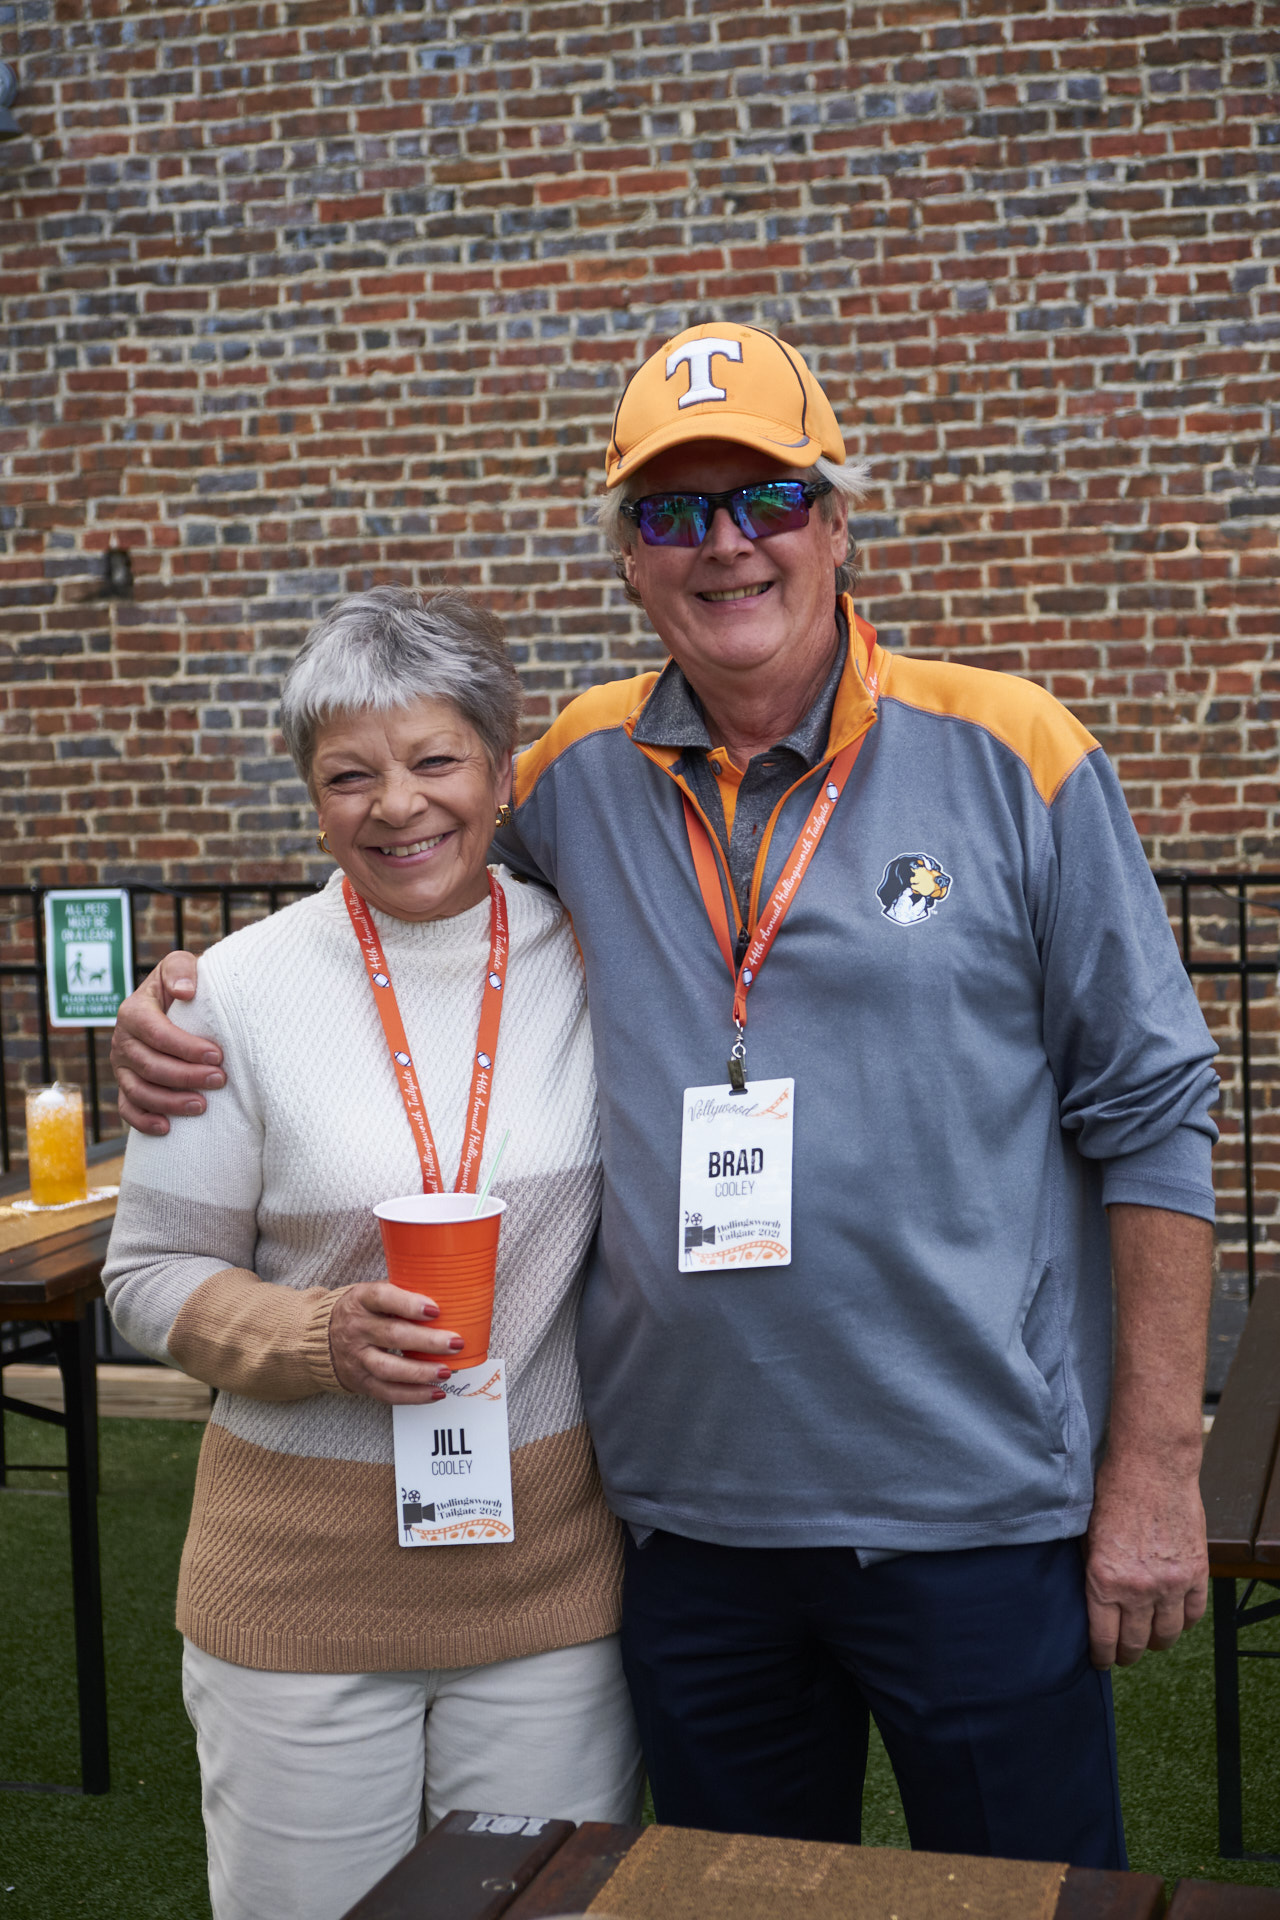 University of Tennessee Football Party, Joe Hollingsworth, Merchants of Beer